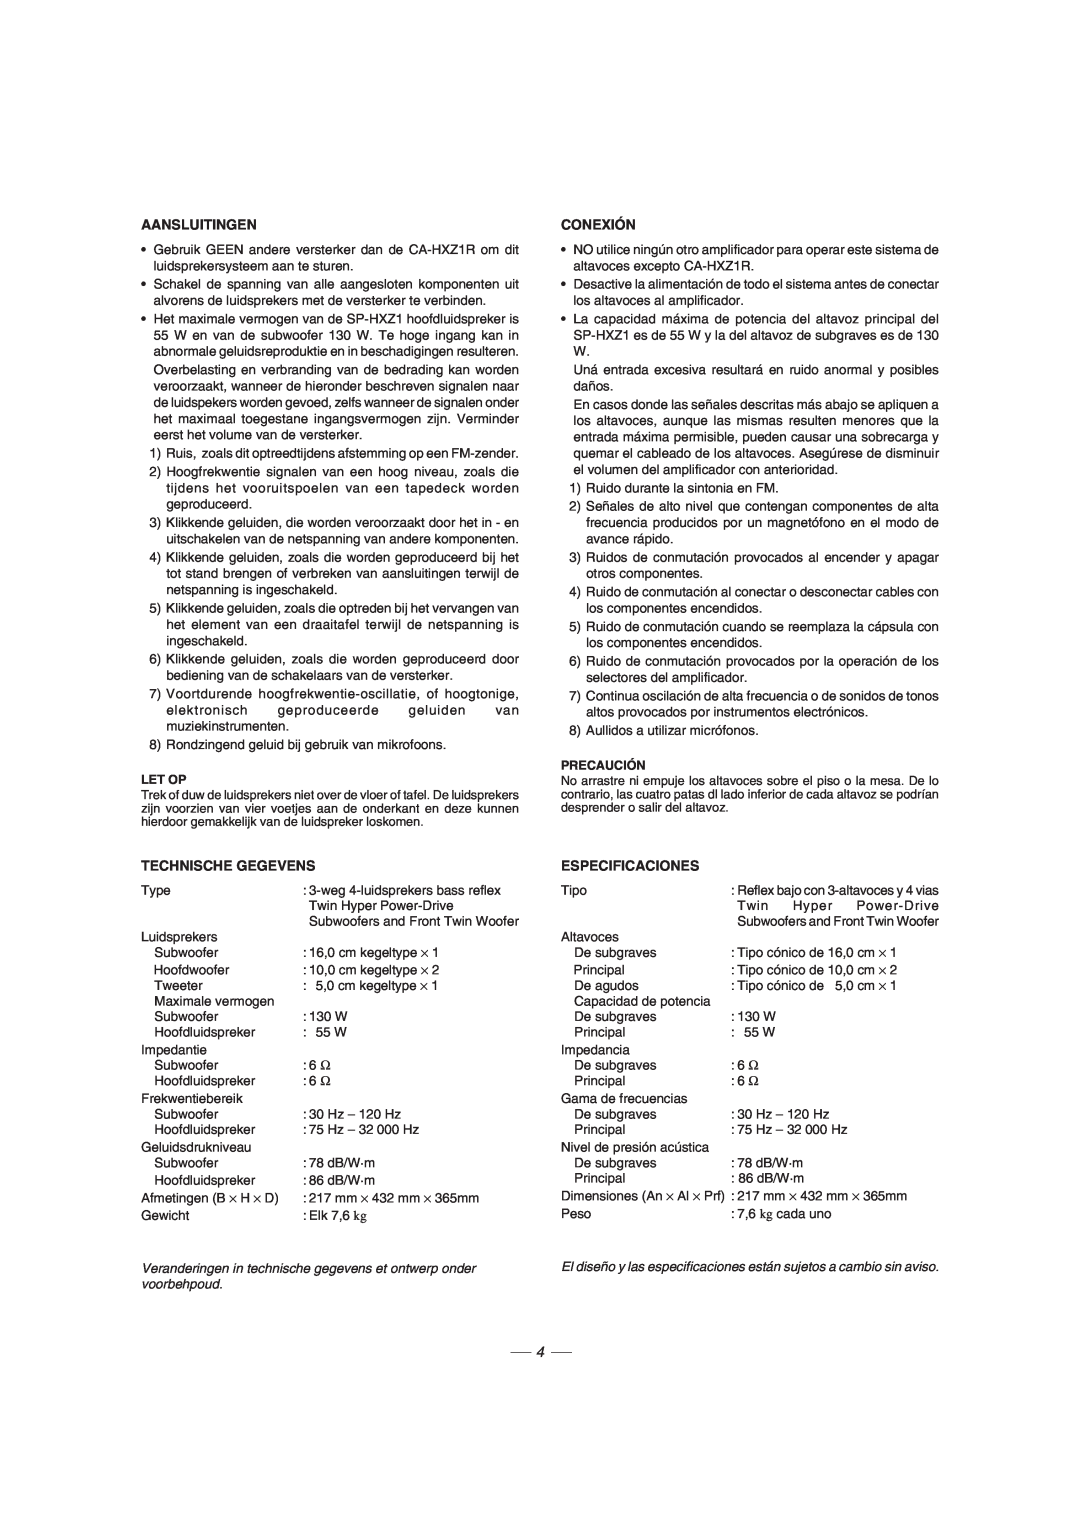 JVC GVT0077-008A manual Aansluitingen, Conexión, Technische Gegevens, Especificaciones 